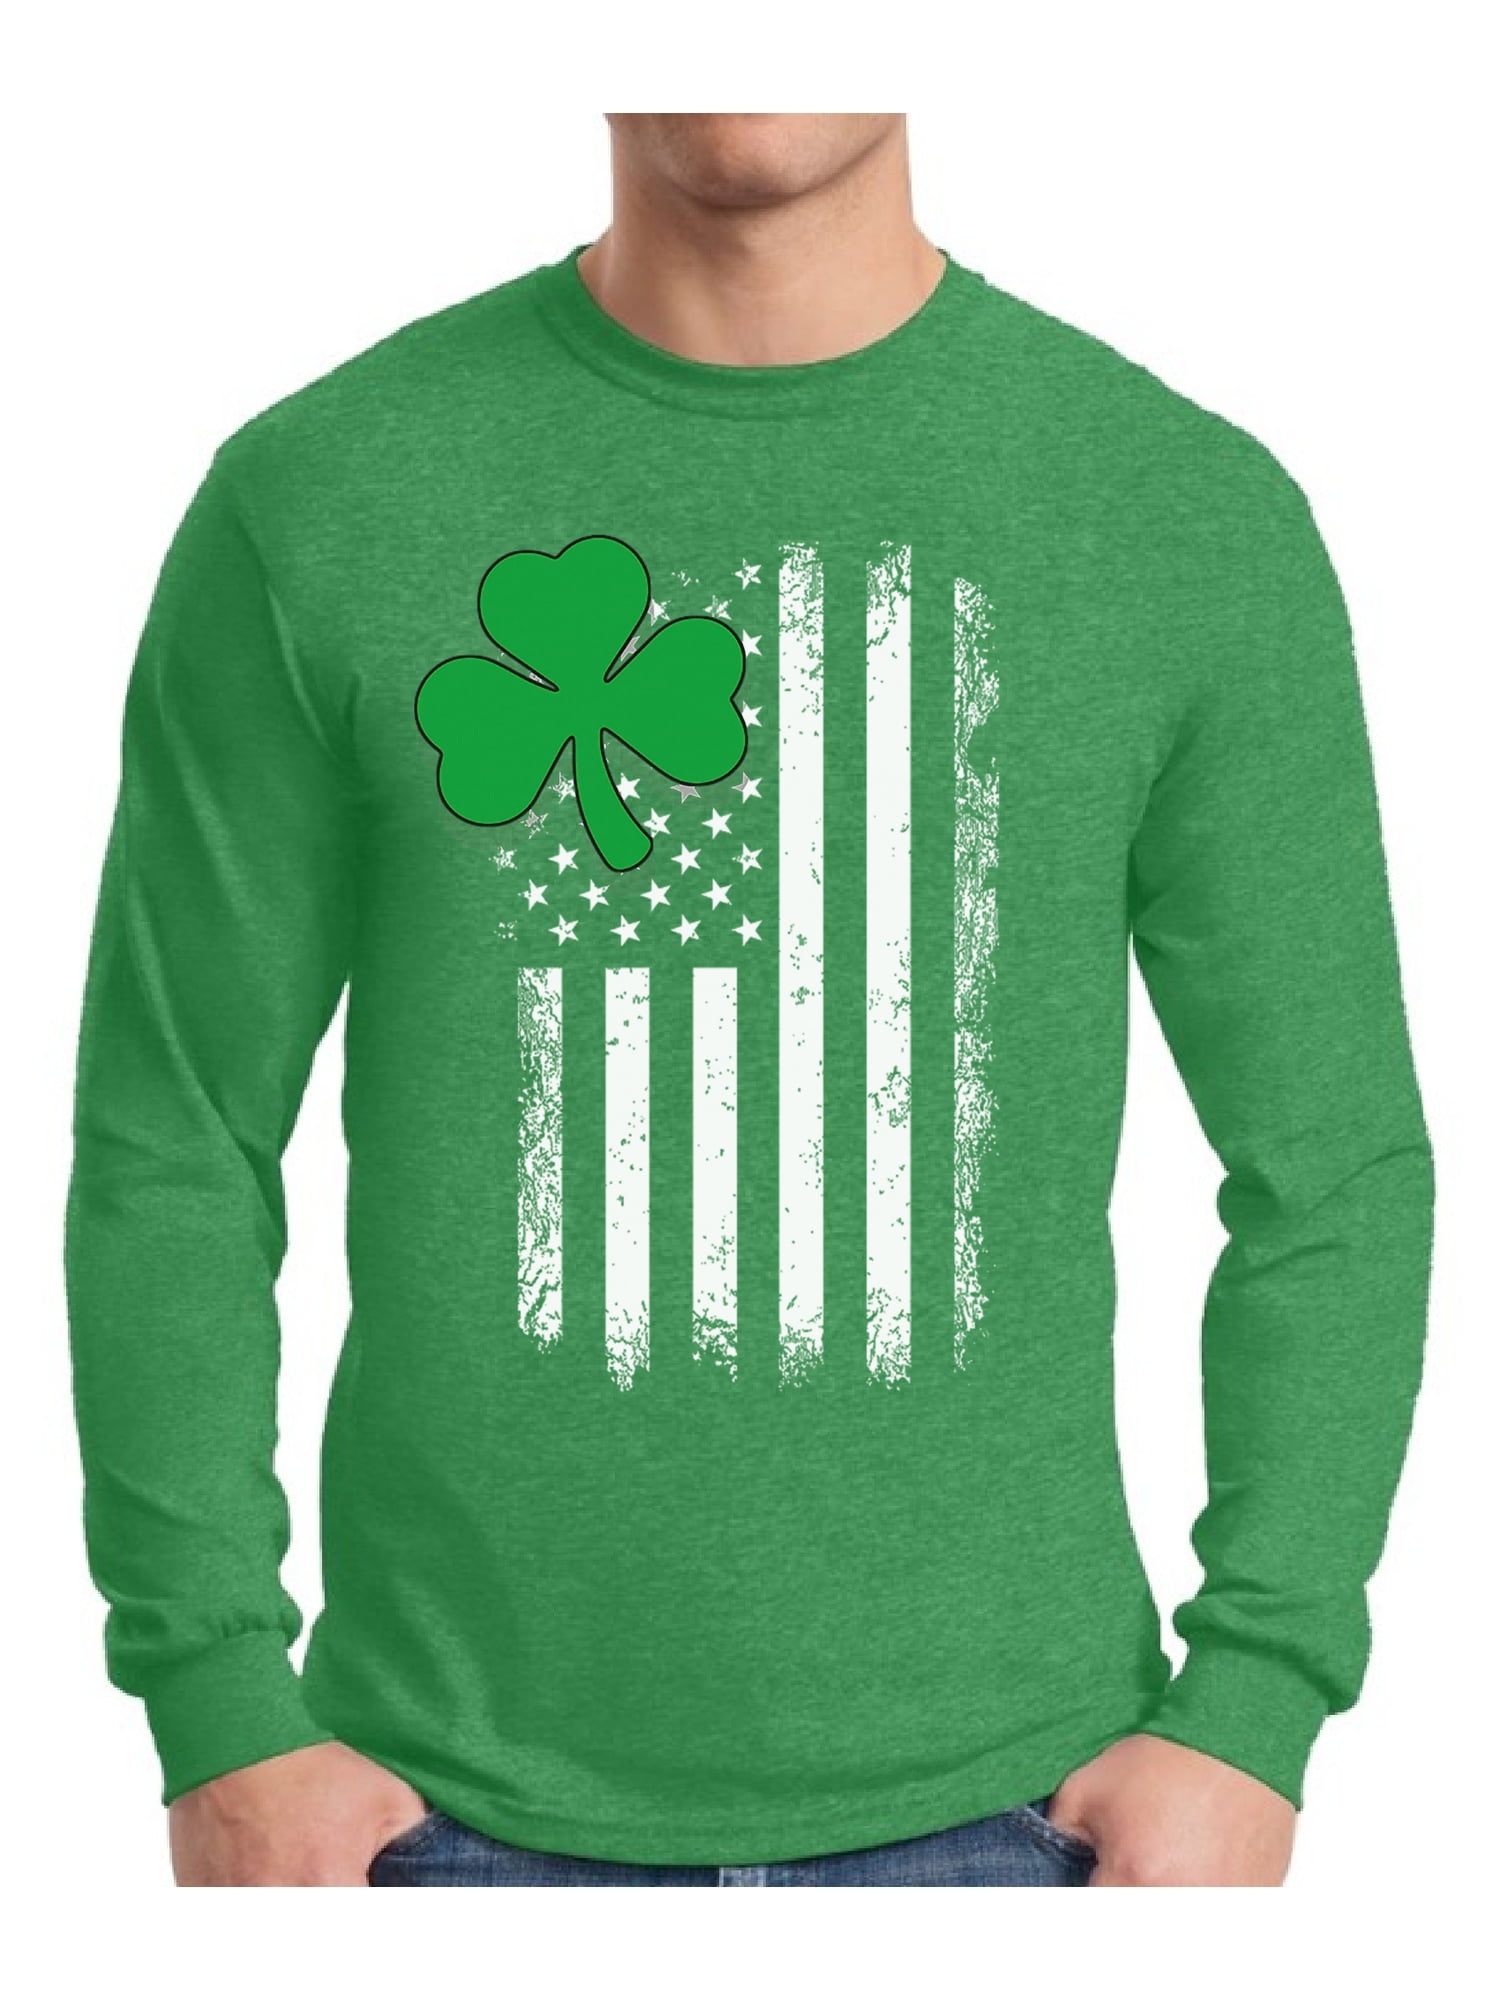 Awkward Styles St Patrick S Shirt Men S Clover Leaf Flag Long Sleeve T Shirt Irish Day